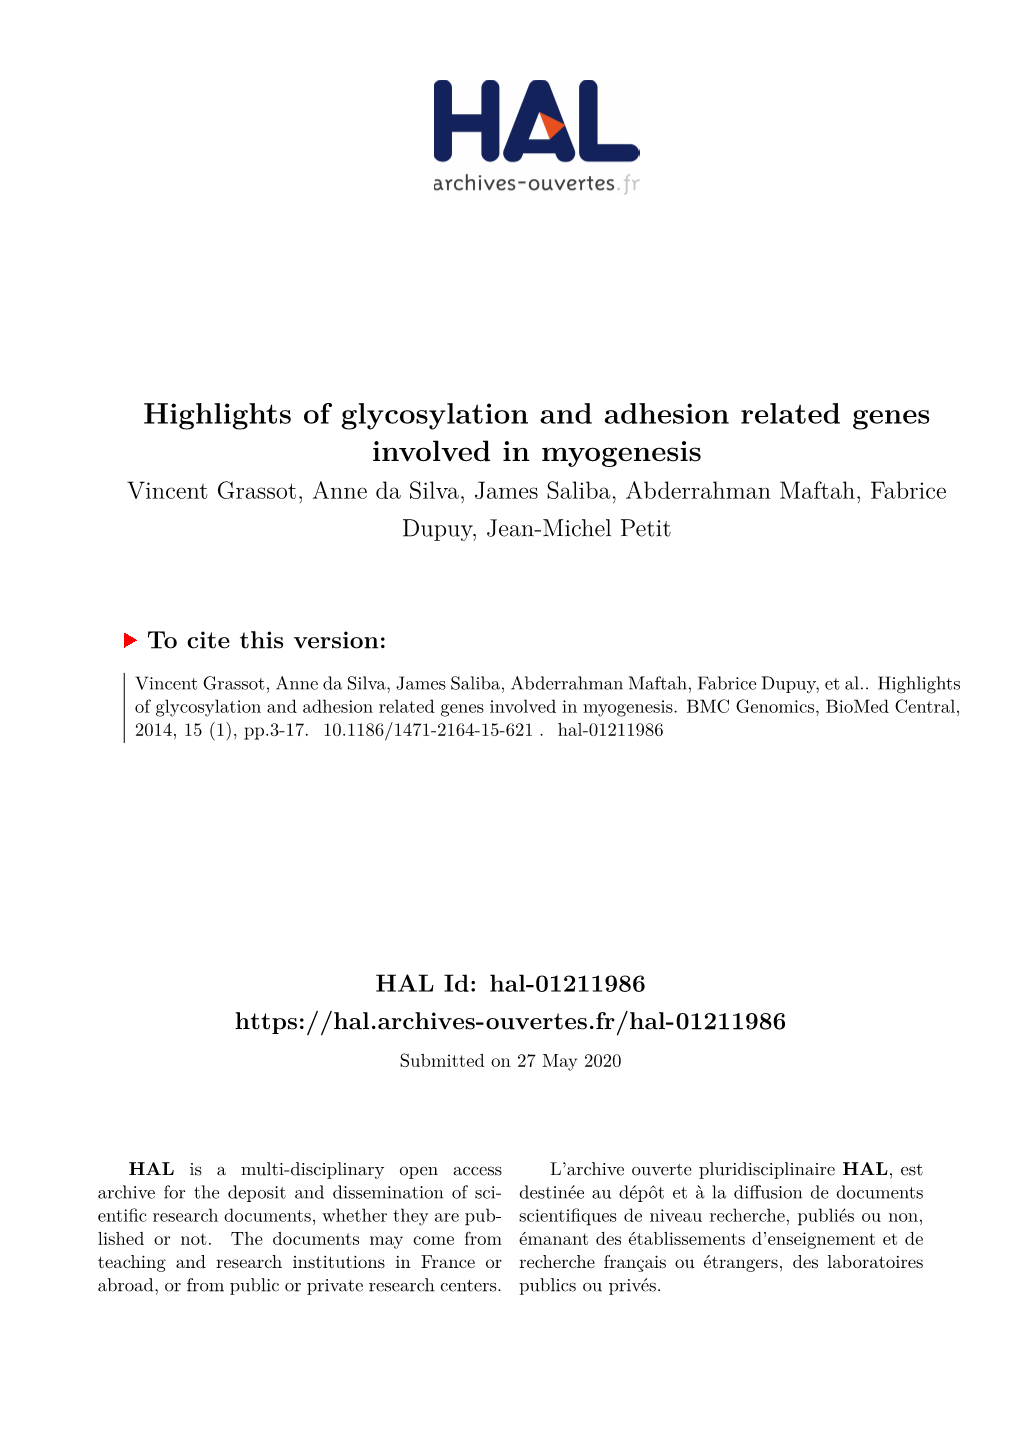 Highlights of Glycosylation and Adhesion